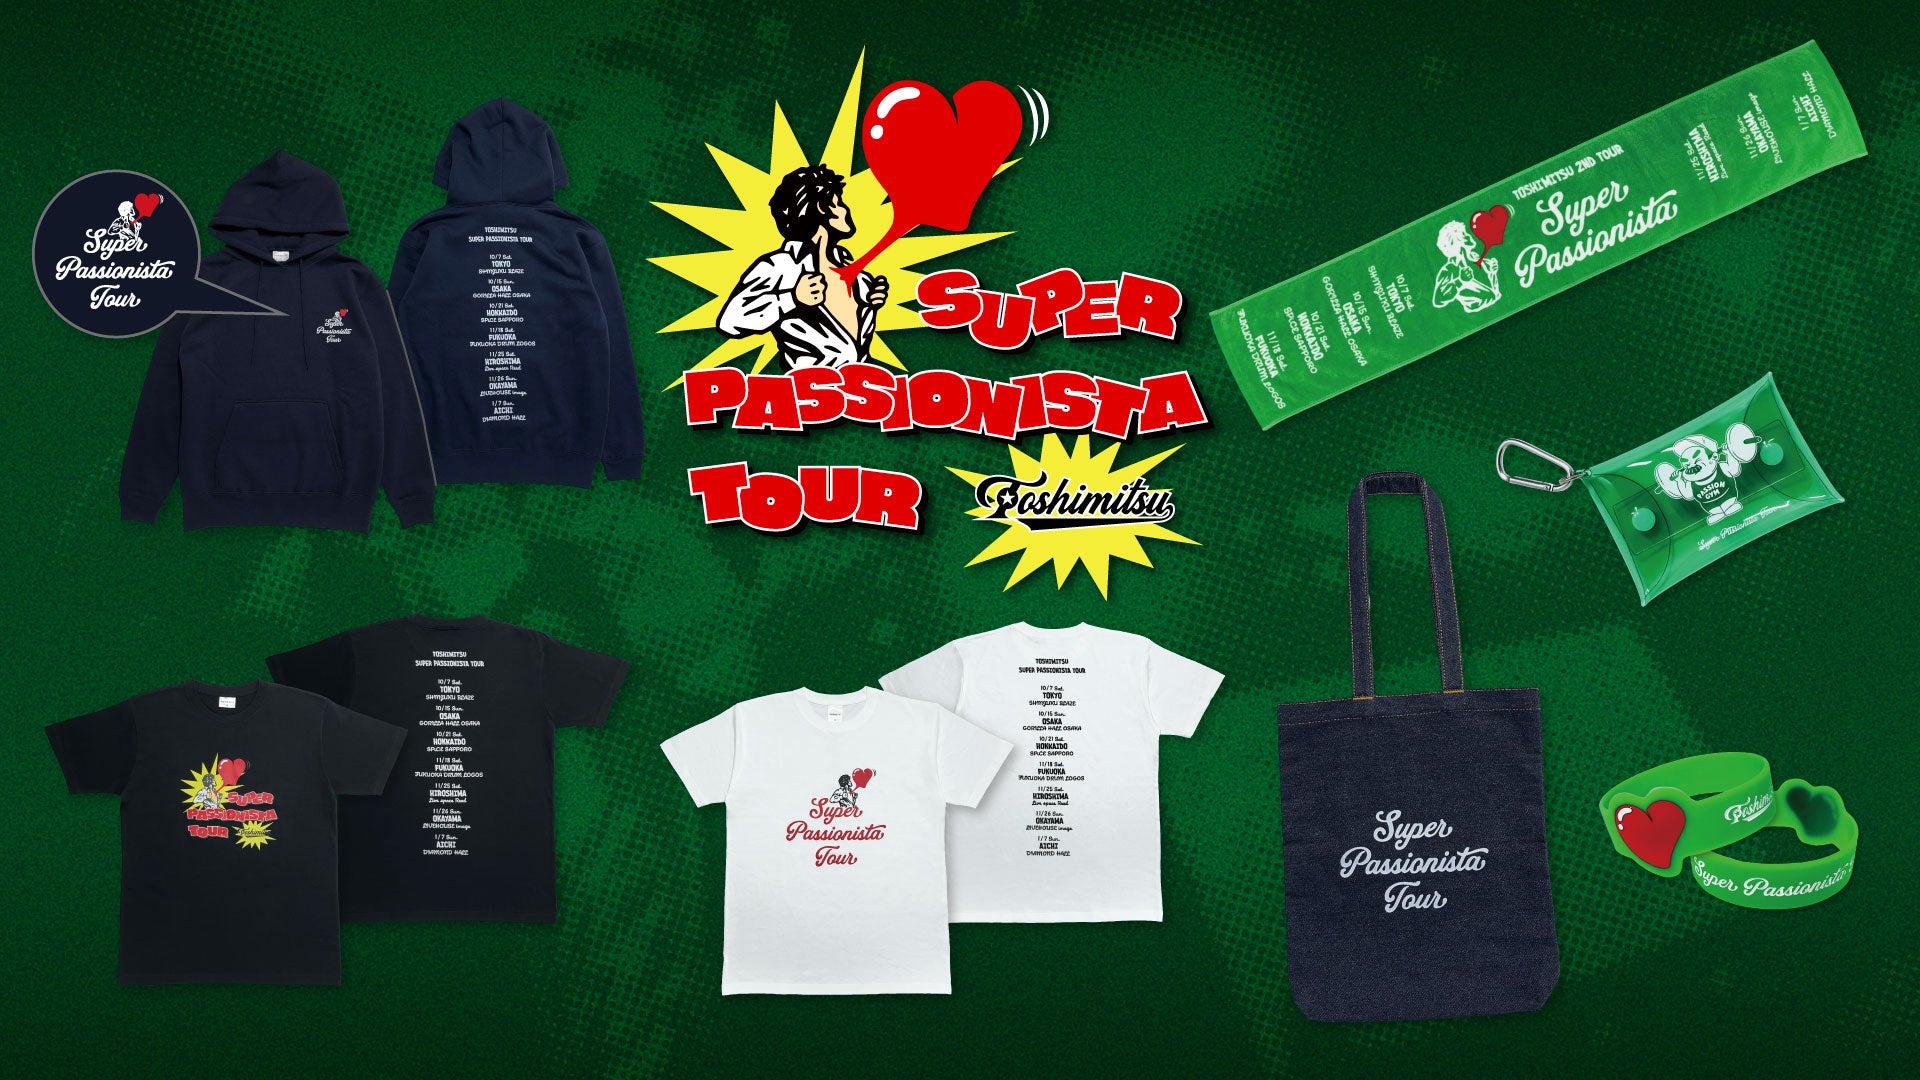 TOSHIMITSU 2nd TOUR「SUPER PASSIONISTA」のツアーグッズが登場!!!